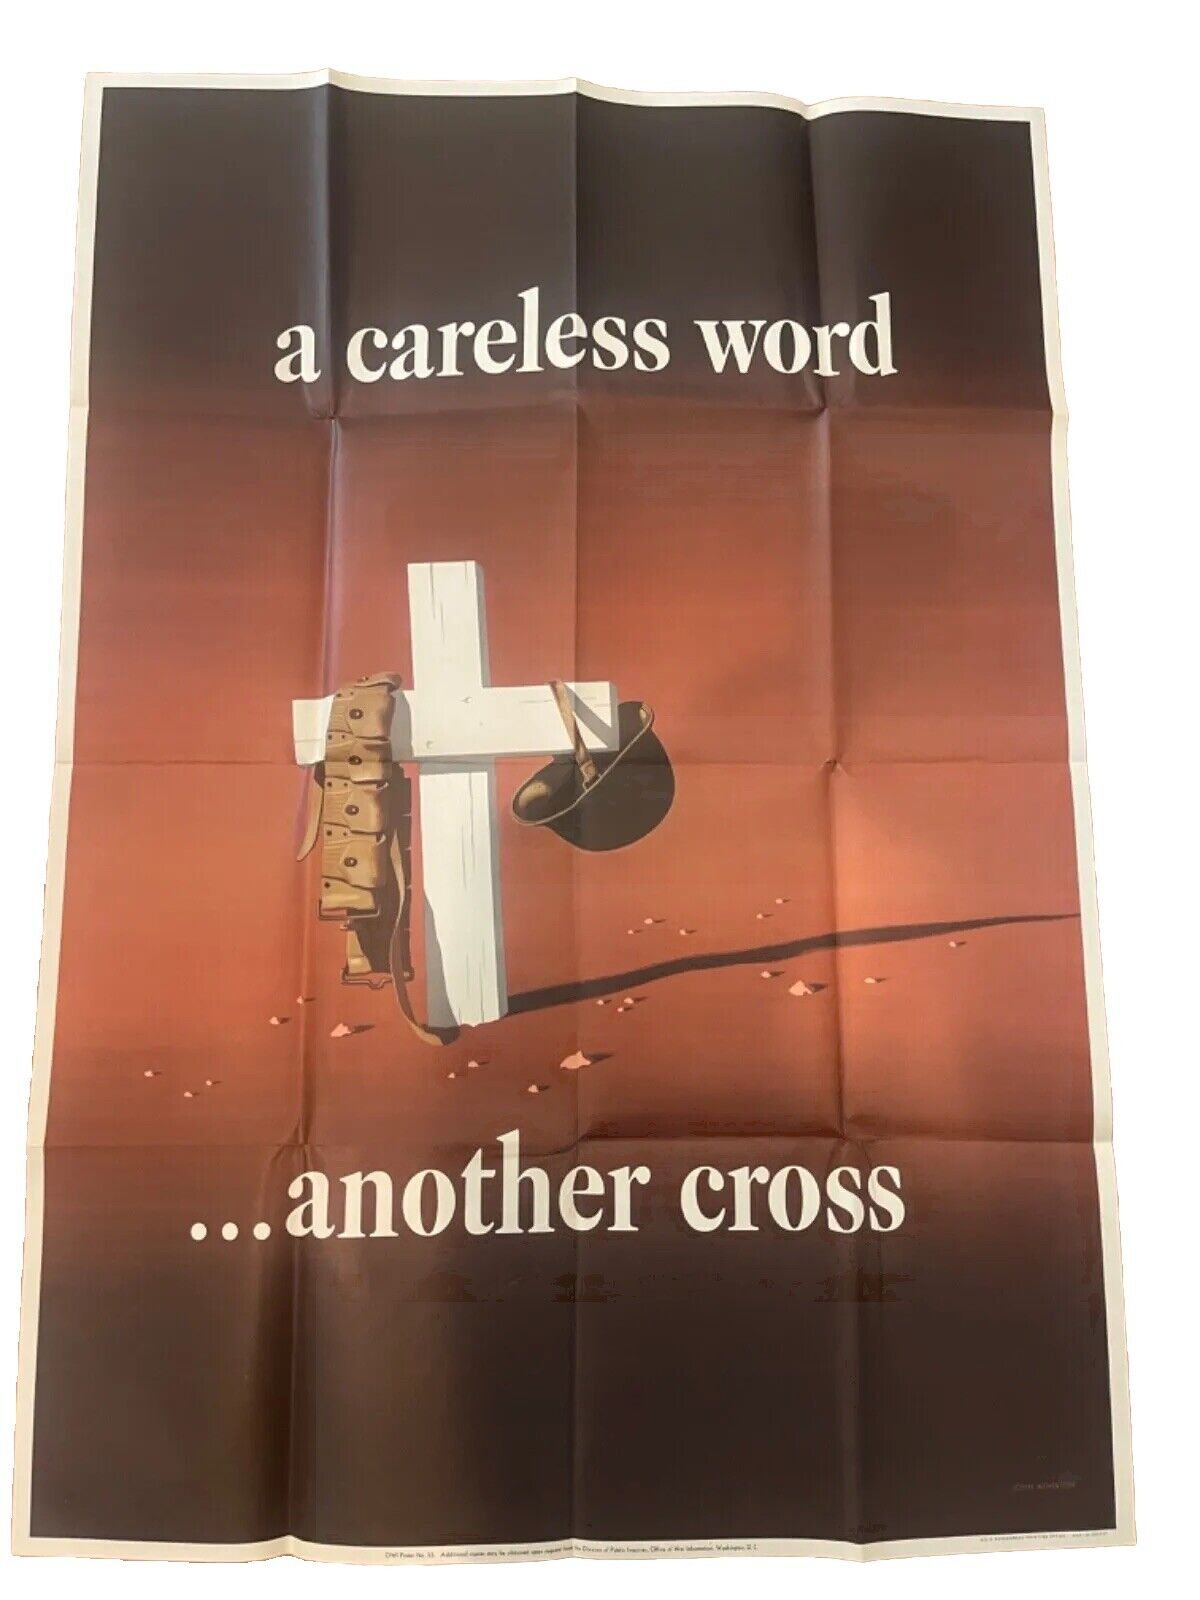 Original VTG WW2 A Careless Word Another Cross by John Atherton c1943 Poster